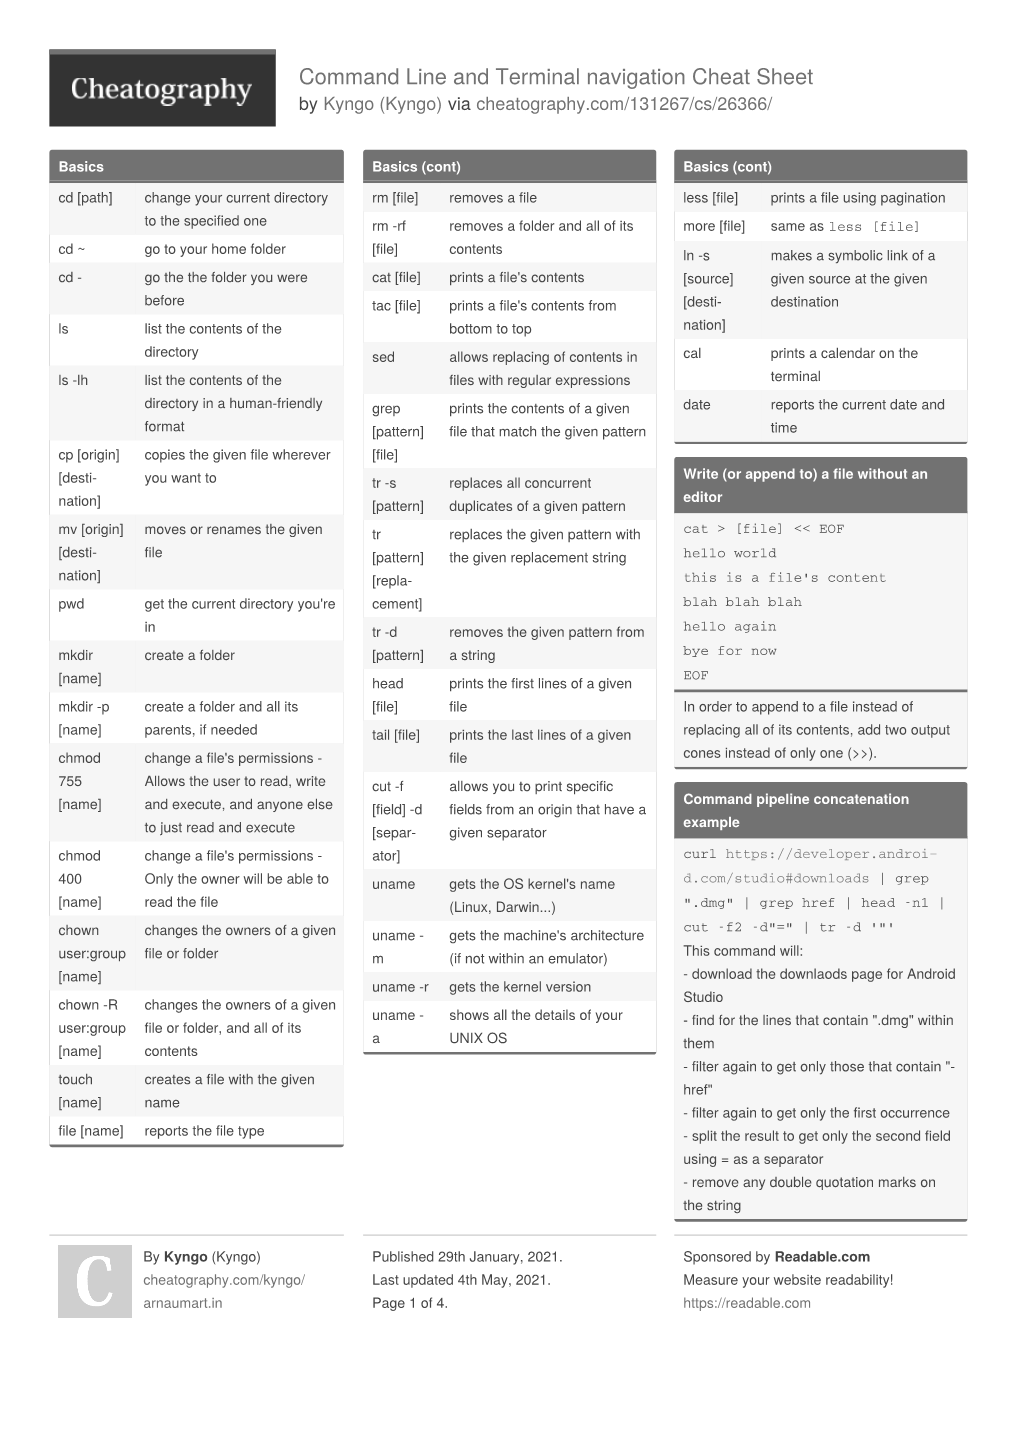 Command Line and Terminal Navigation Cheat Sheet by Kyngo (Kyngo) Via Cheatography.Com/131267/Cs/26366